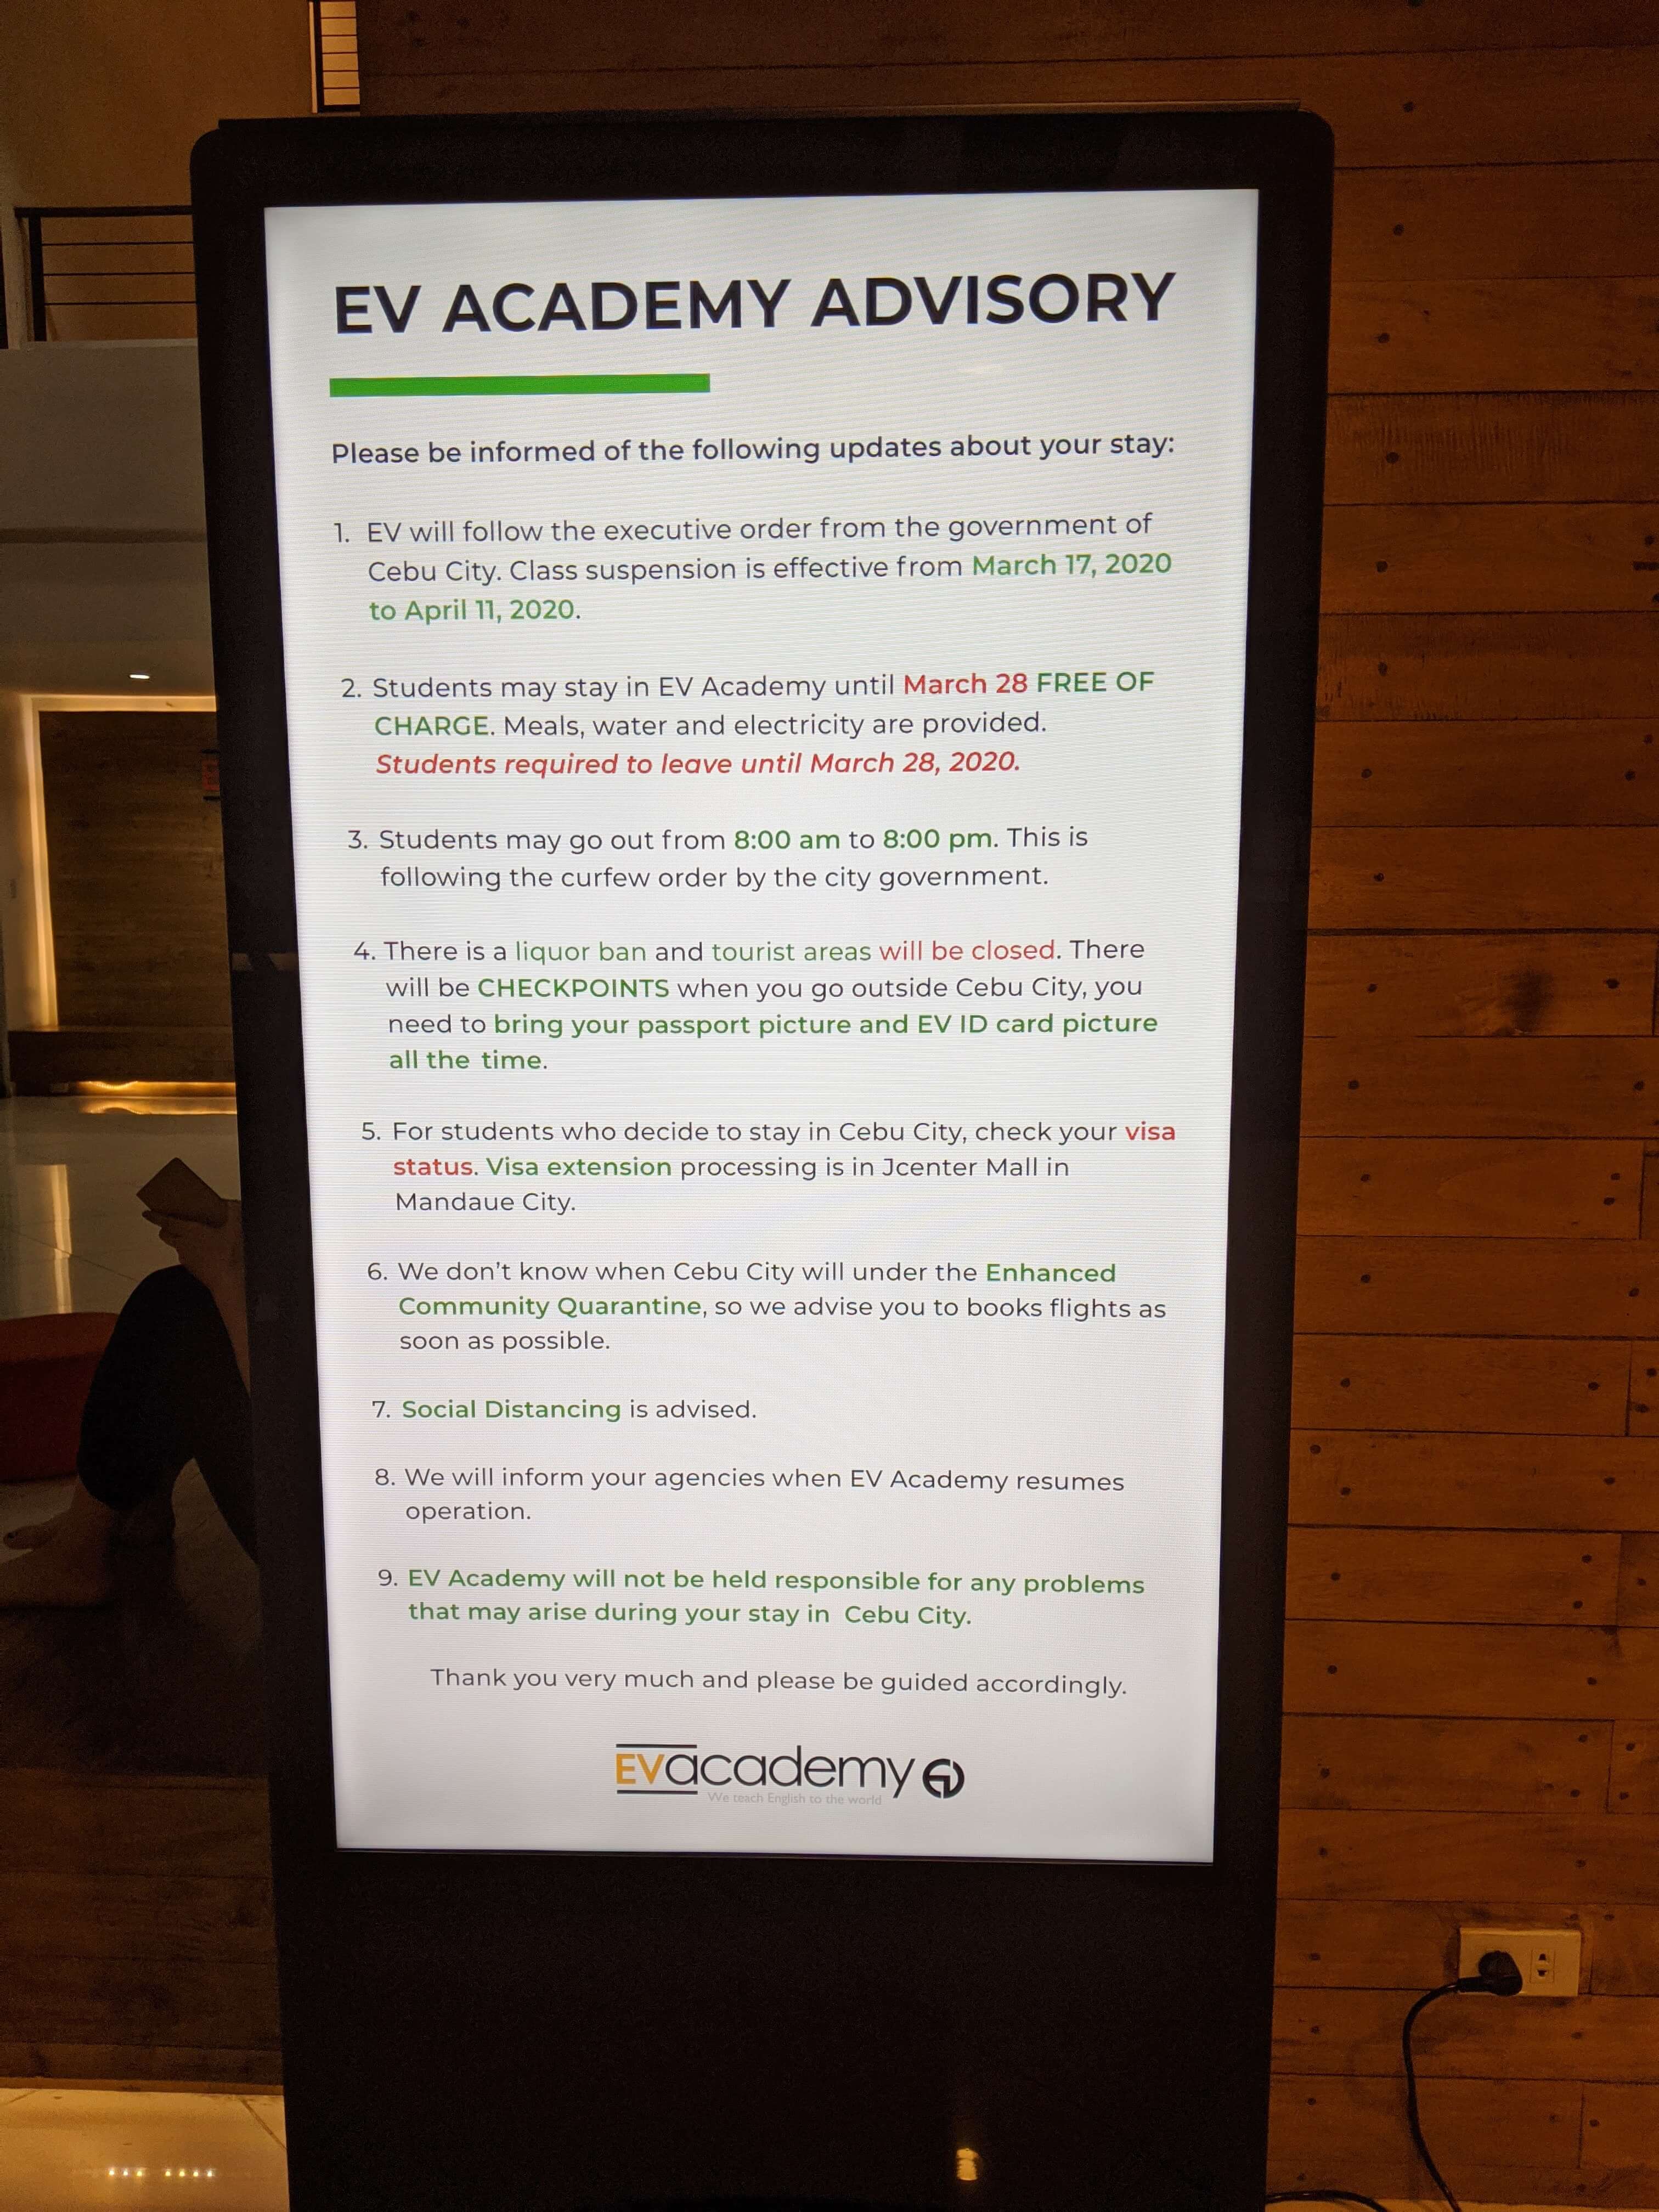 EV Academyの電光掲示板です。休校のことについて書いてあります。